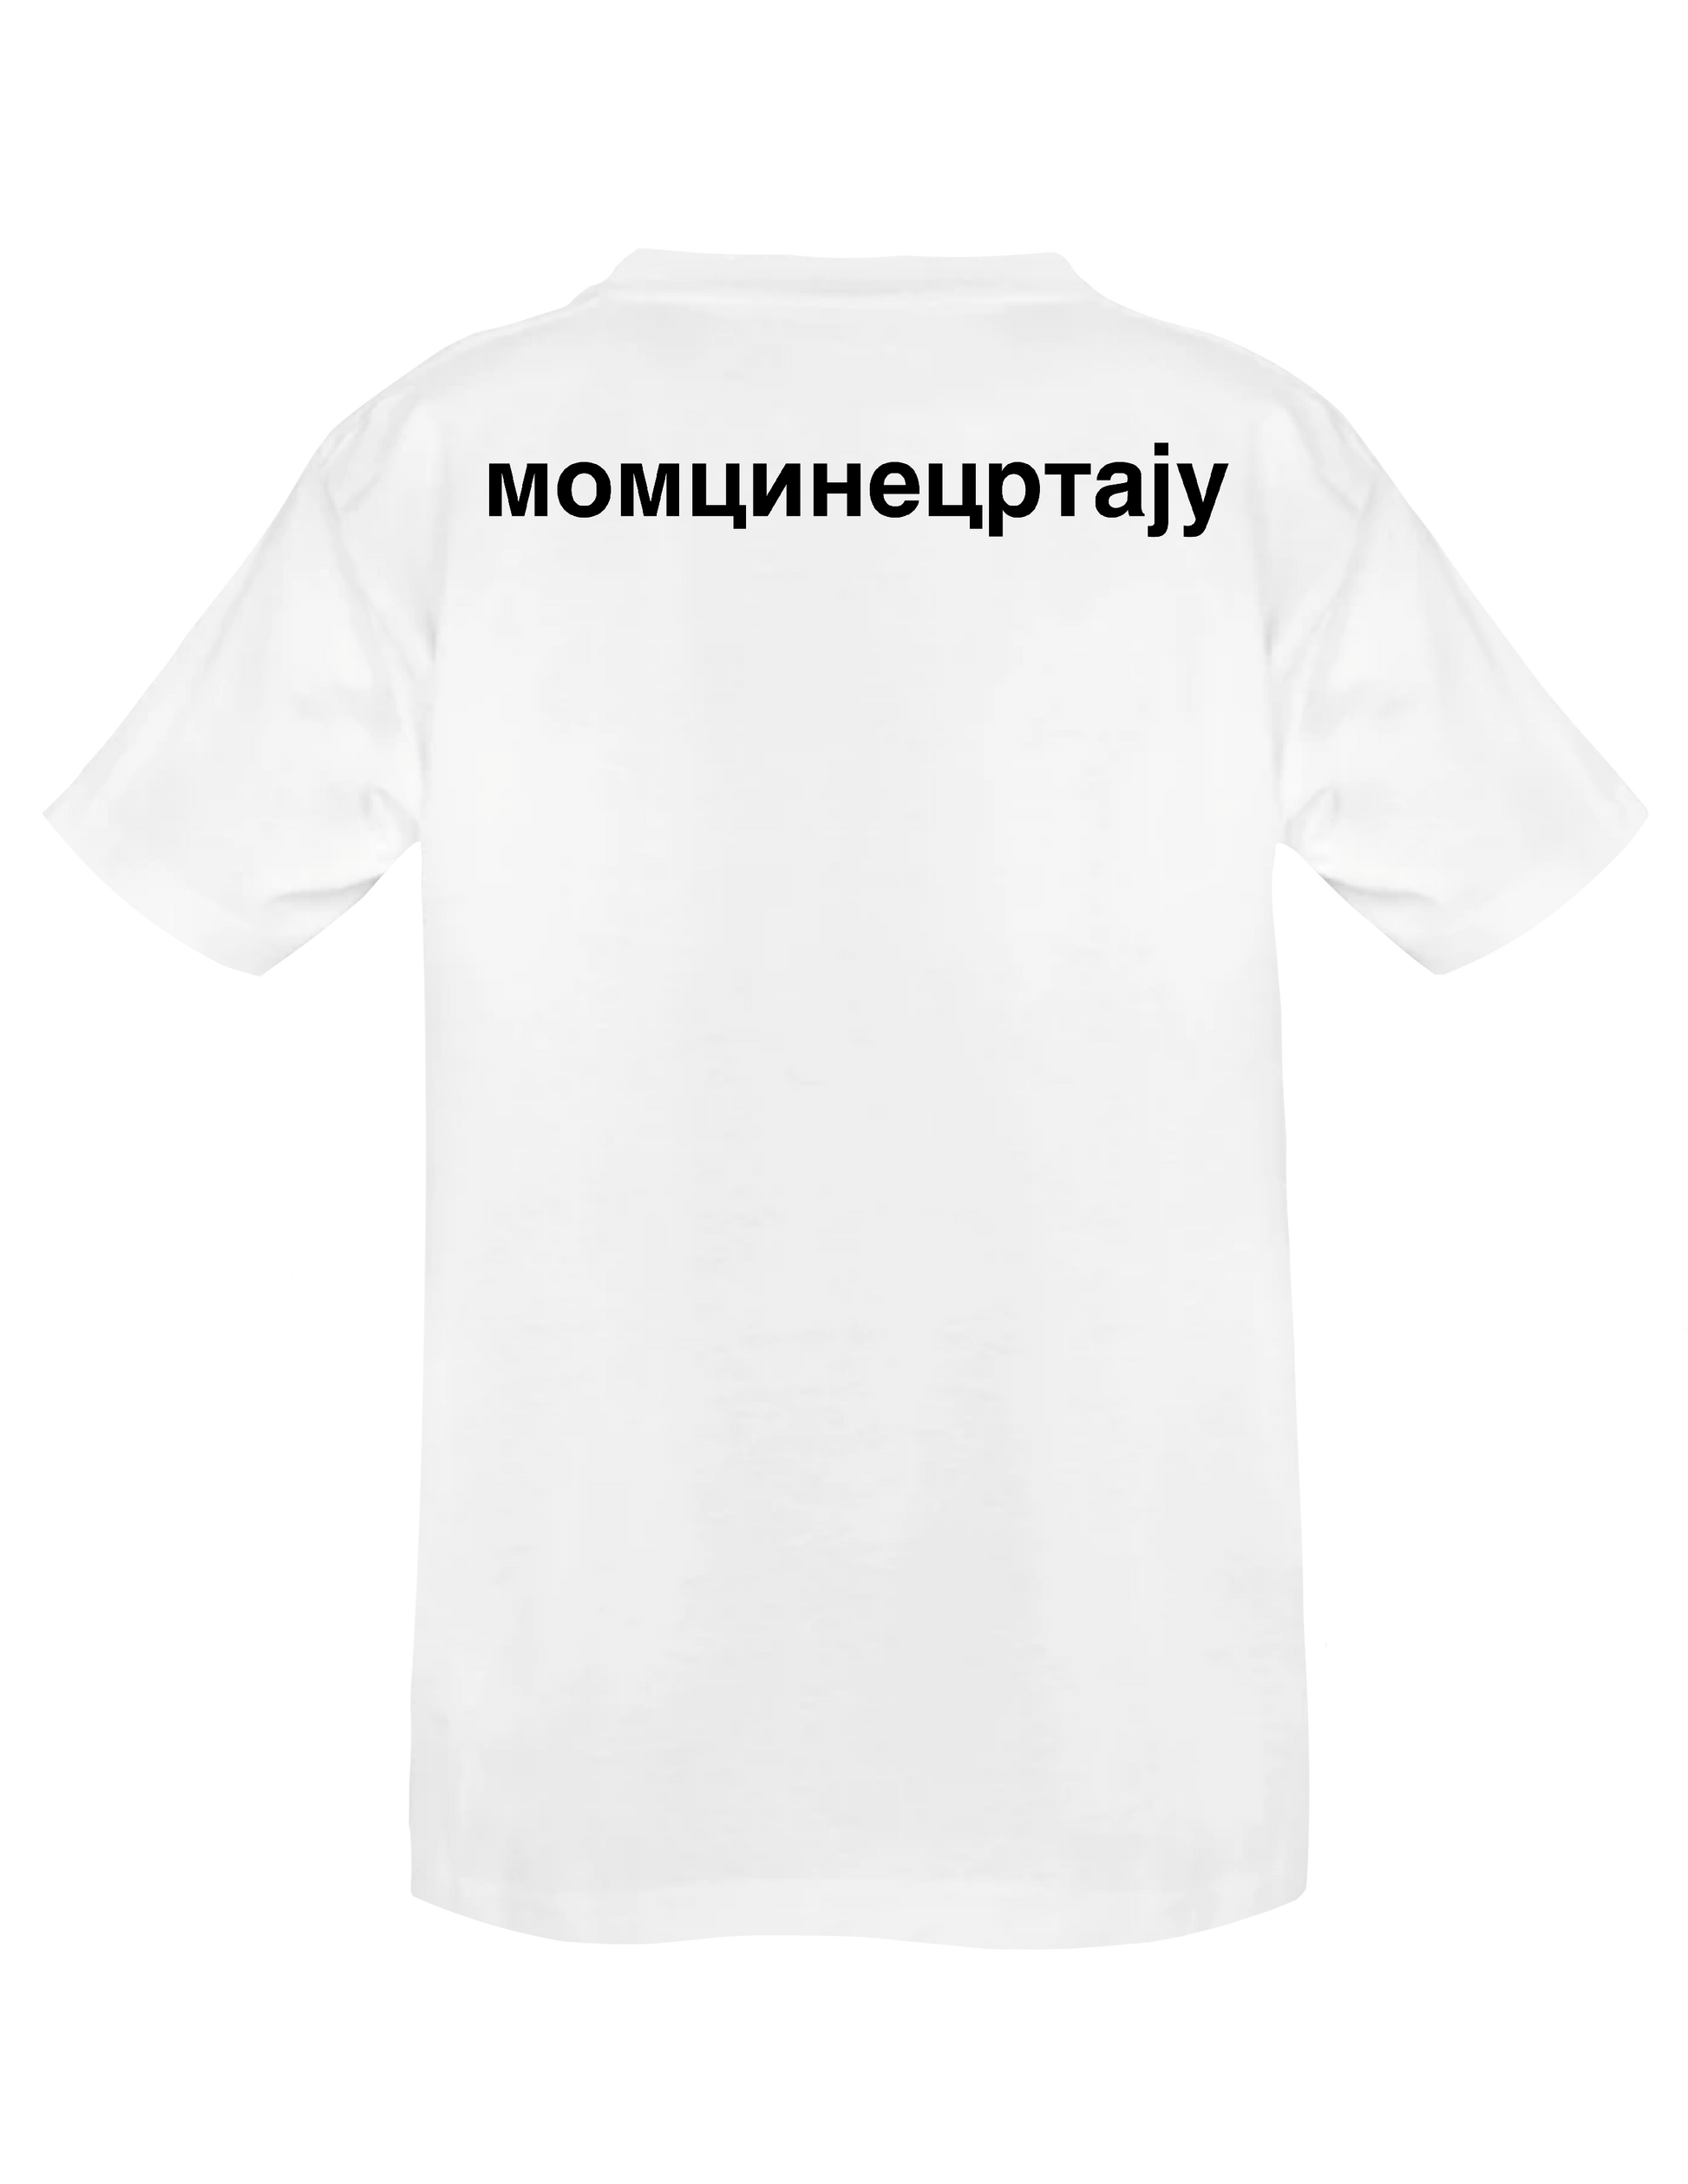 MAC MILLER - SWIMMING (White) - T-Shirt by BOYSDONTDRAW